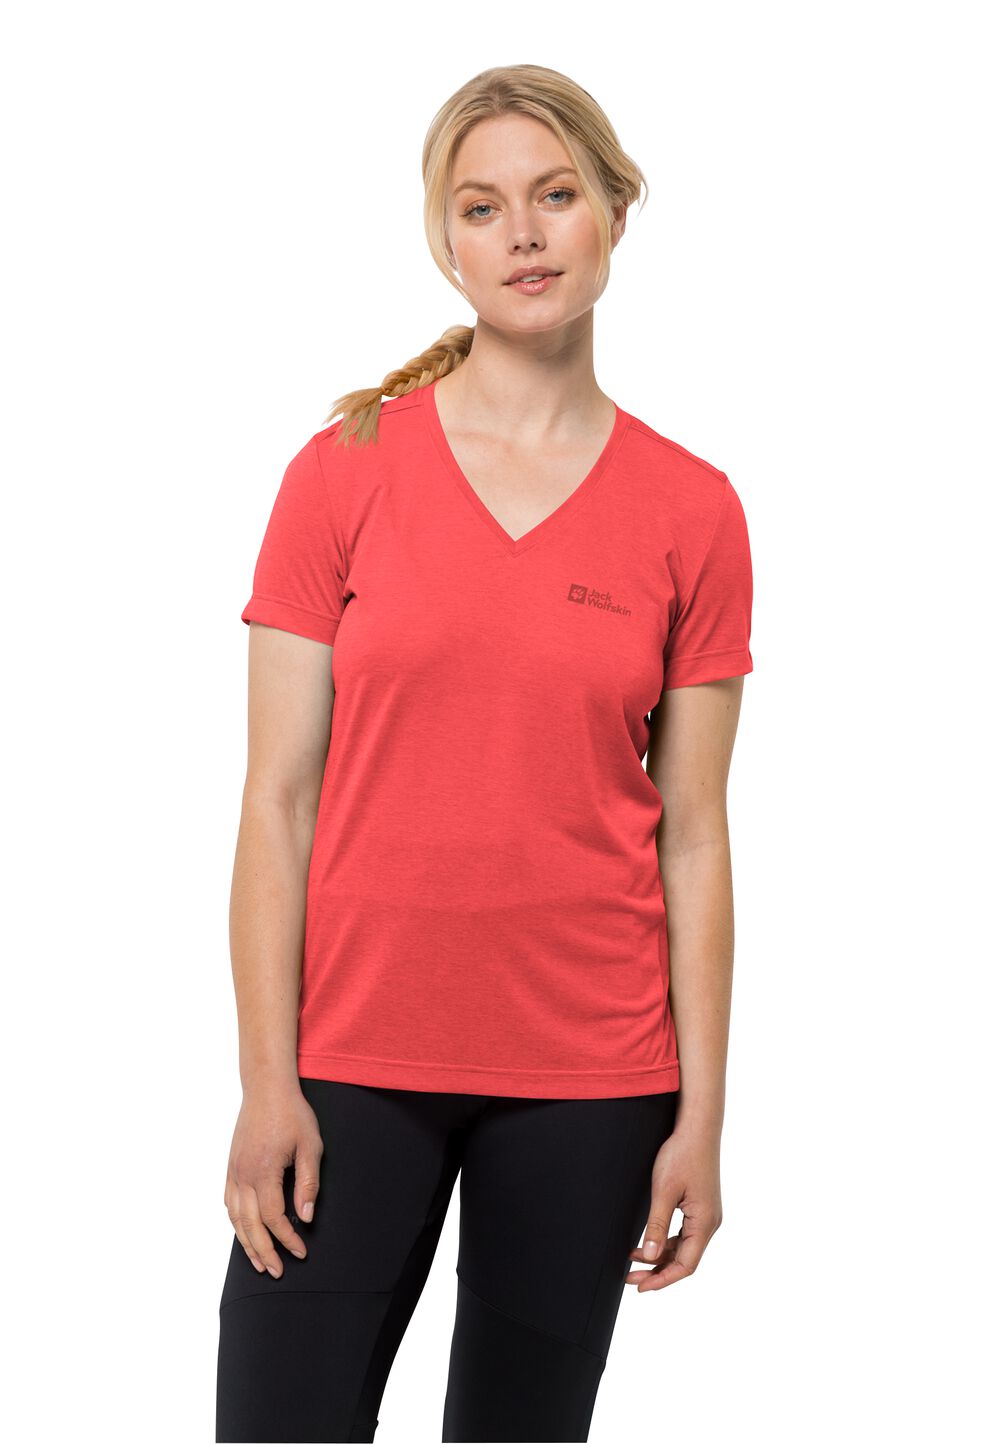 Jack Wolfskin Crosstrail T-Shirt Women Functioneel shirt Dames S rood vibrant red